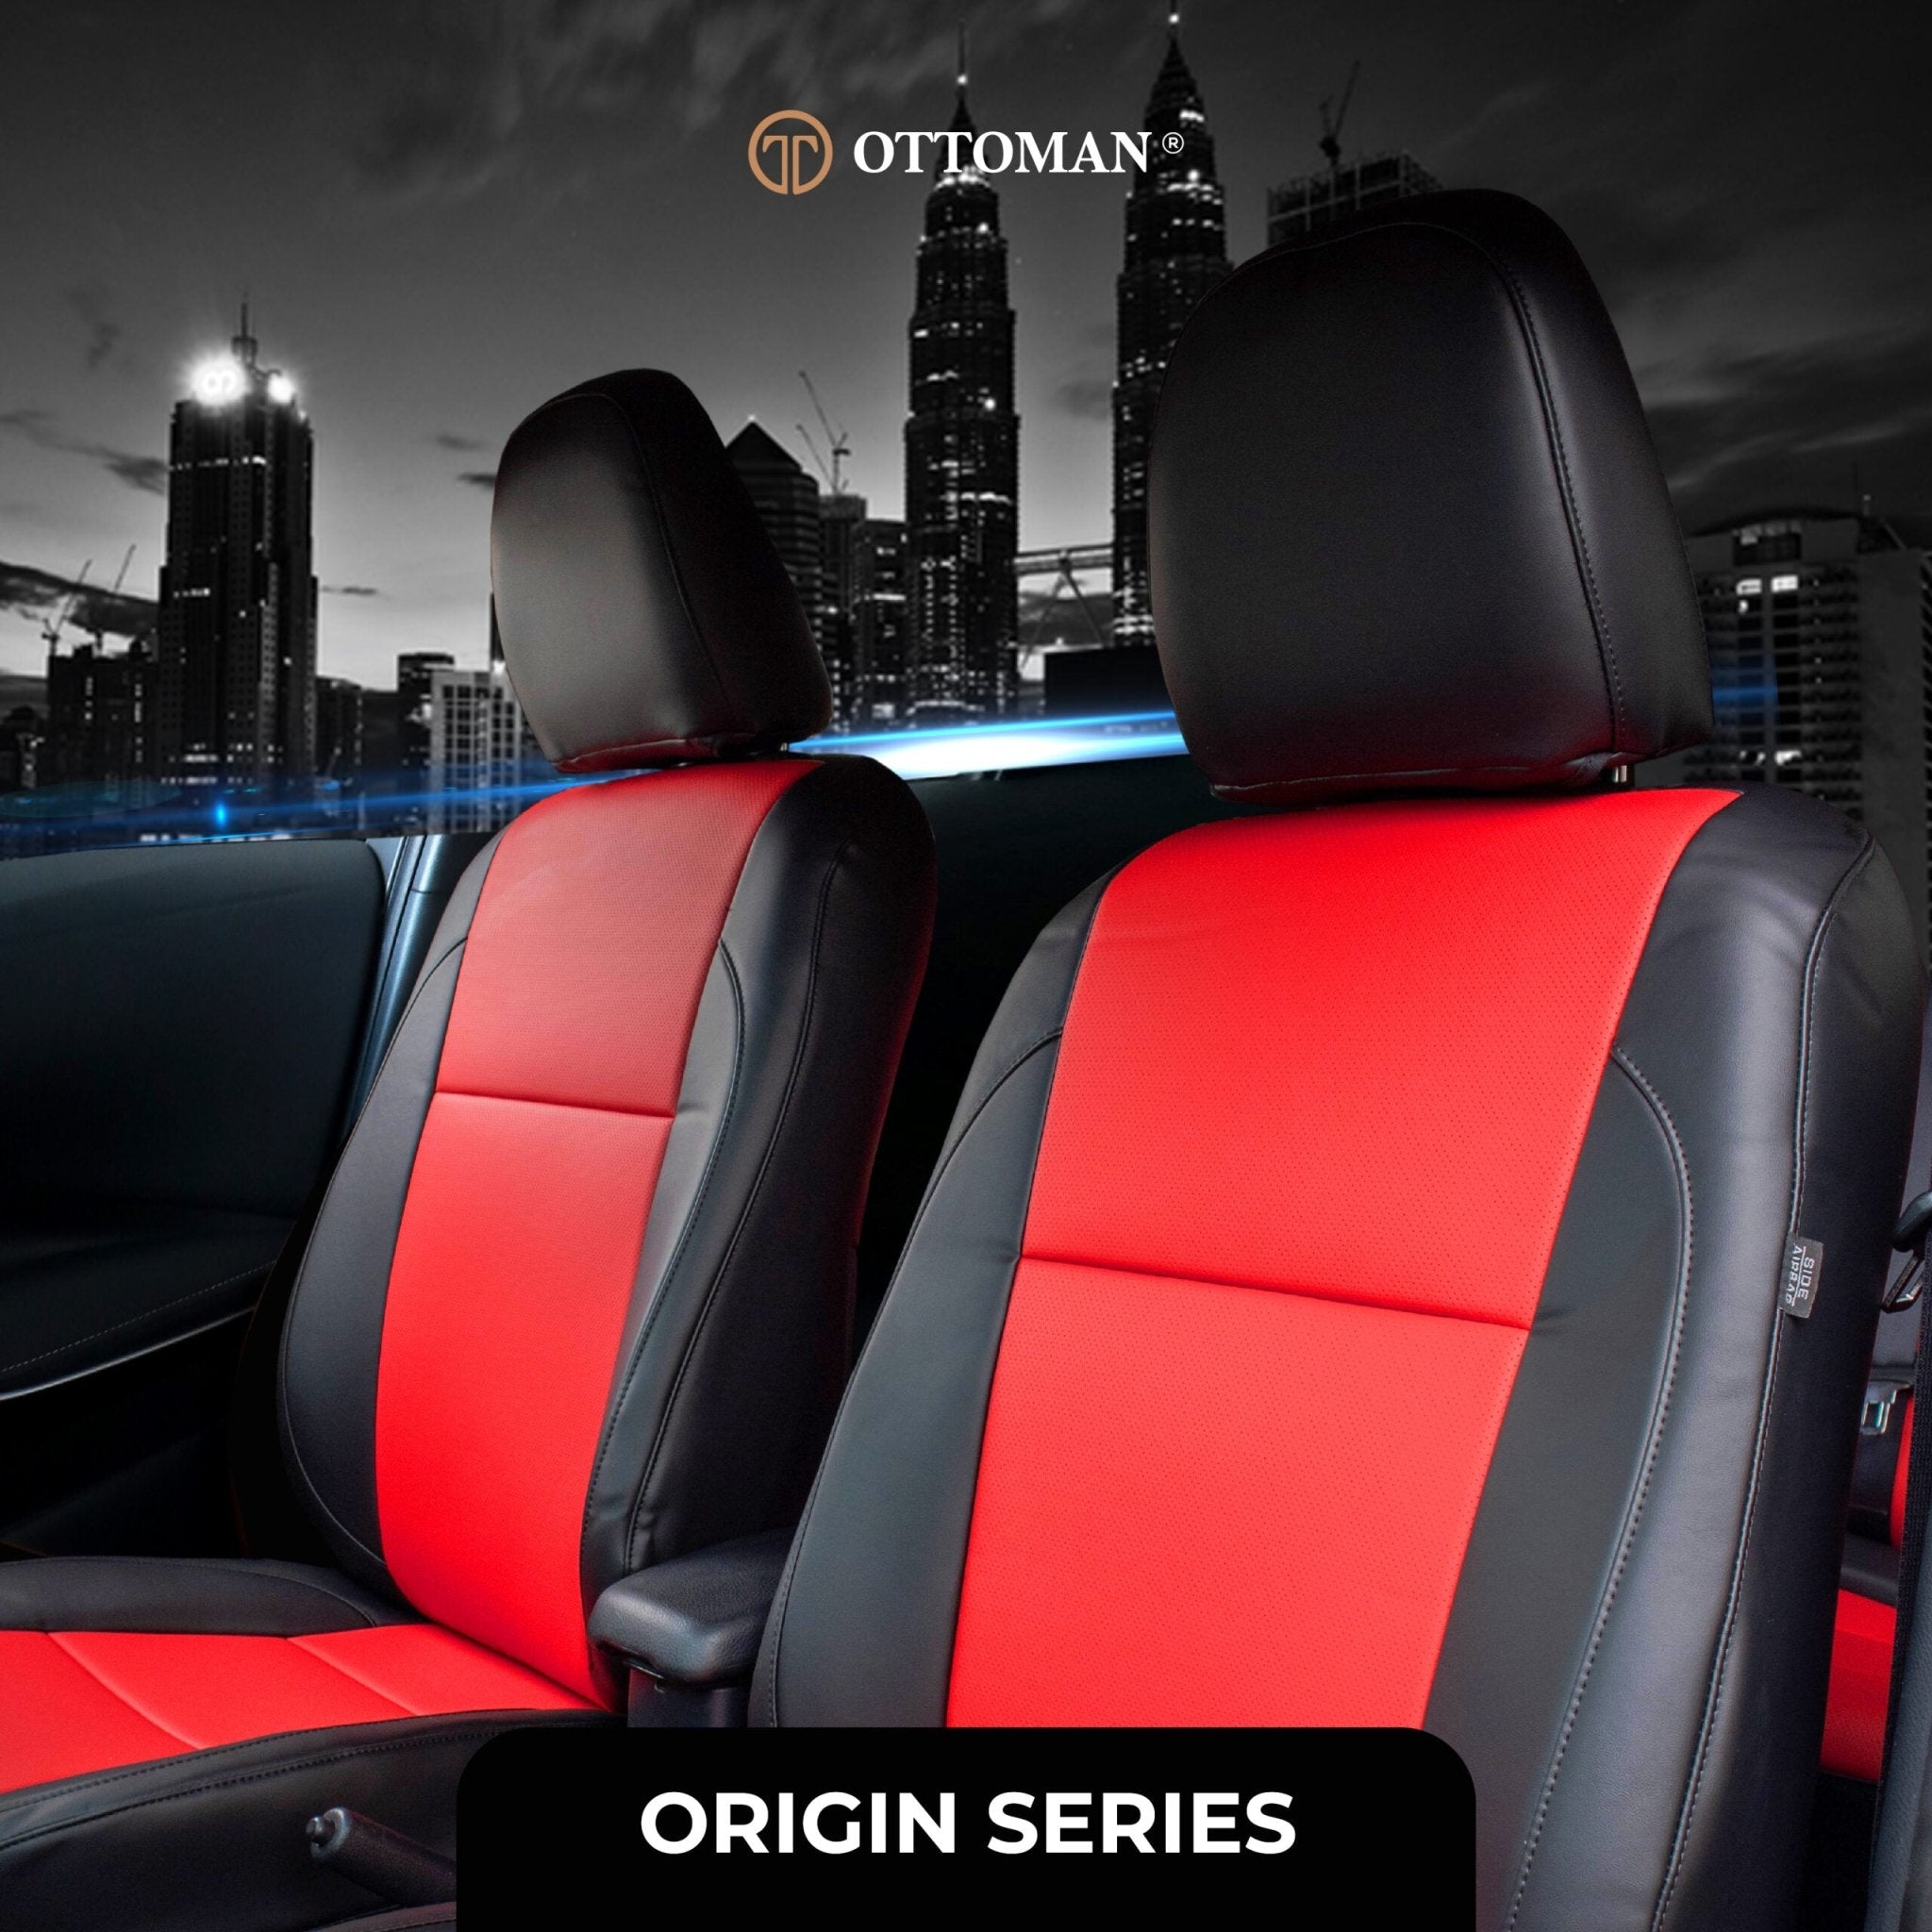 Honda Odyssey RC4 (2017-Present) Ottoman Seat Cover Seat Cover in Klang Selangor, Penang, Johor Bahru - Ottoman Car Mats